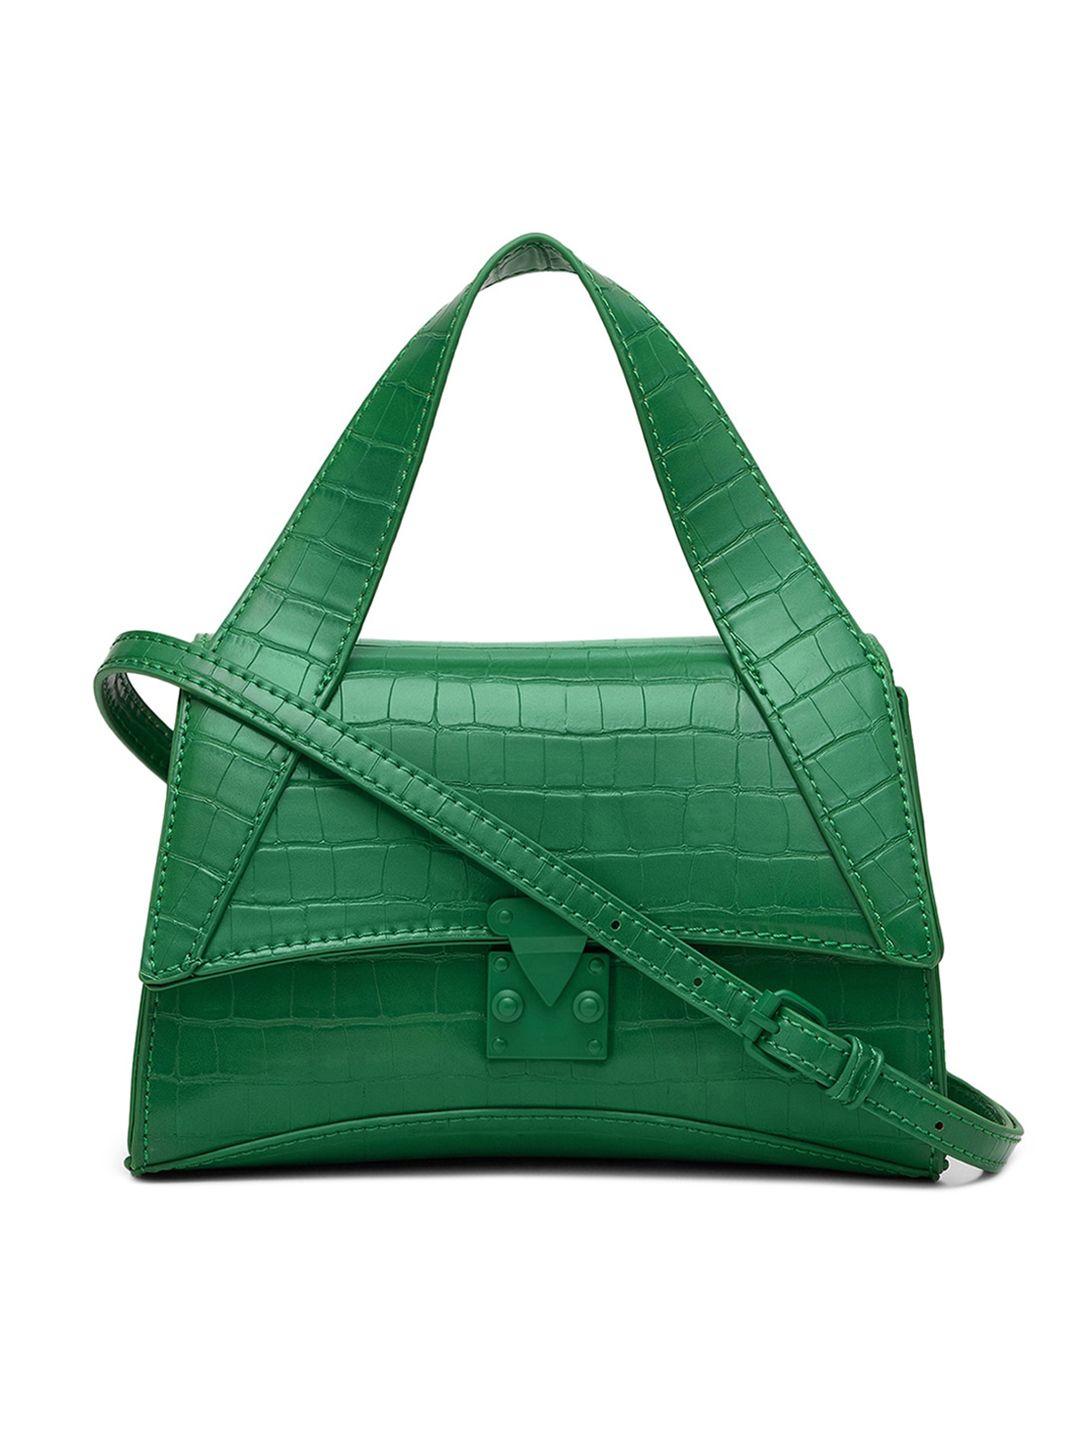 miraggio green croc-textured structured satchel bag with sling strap